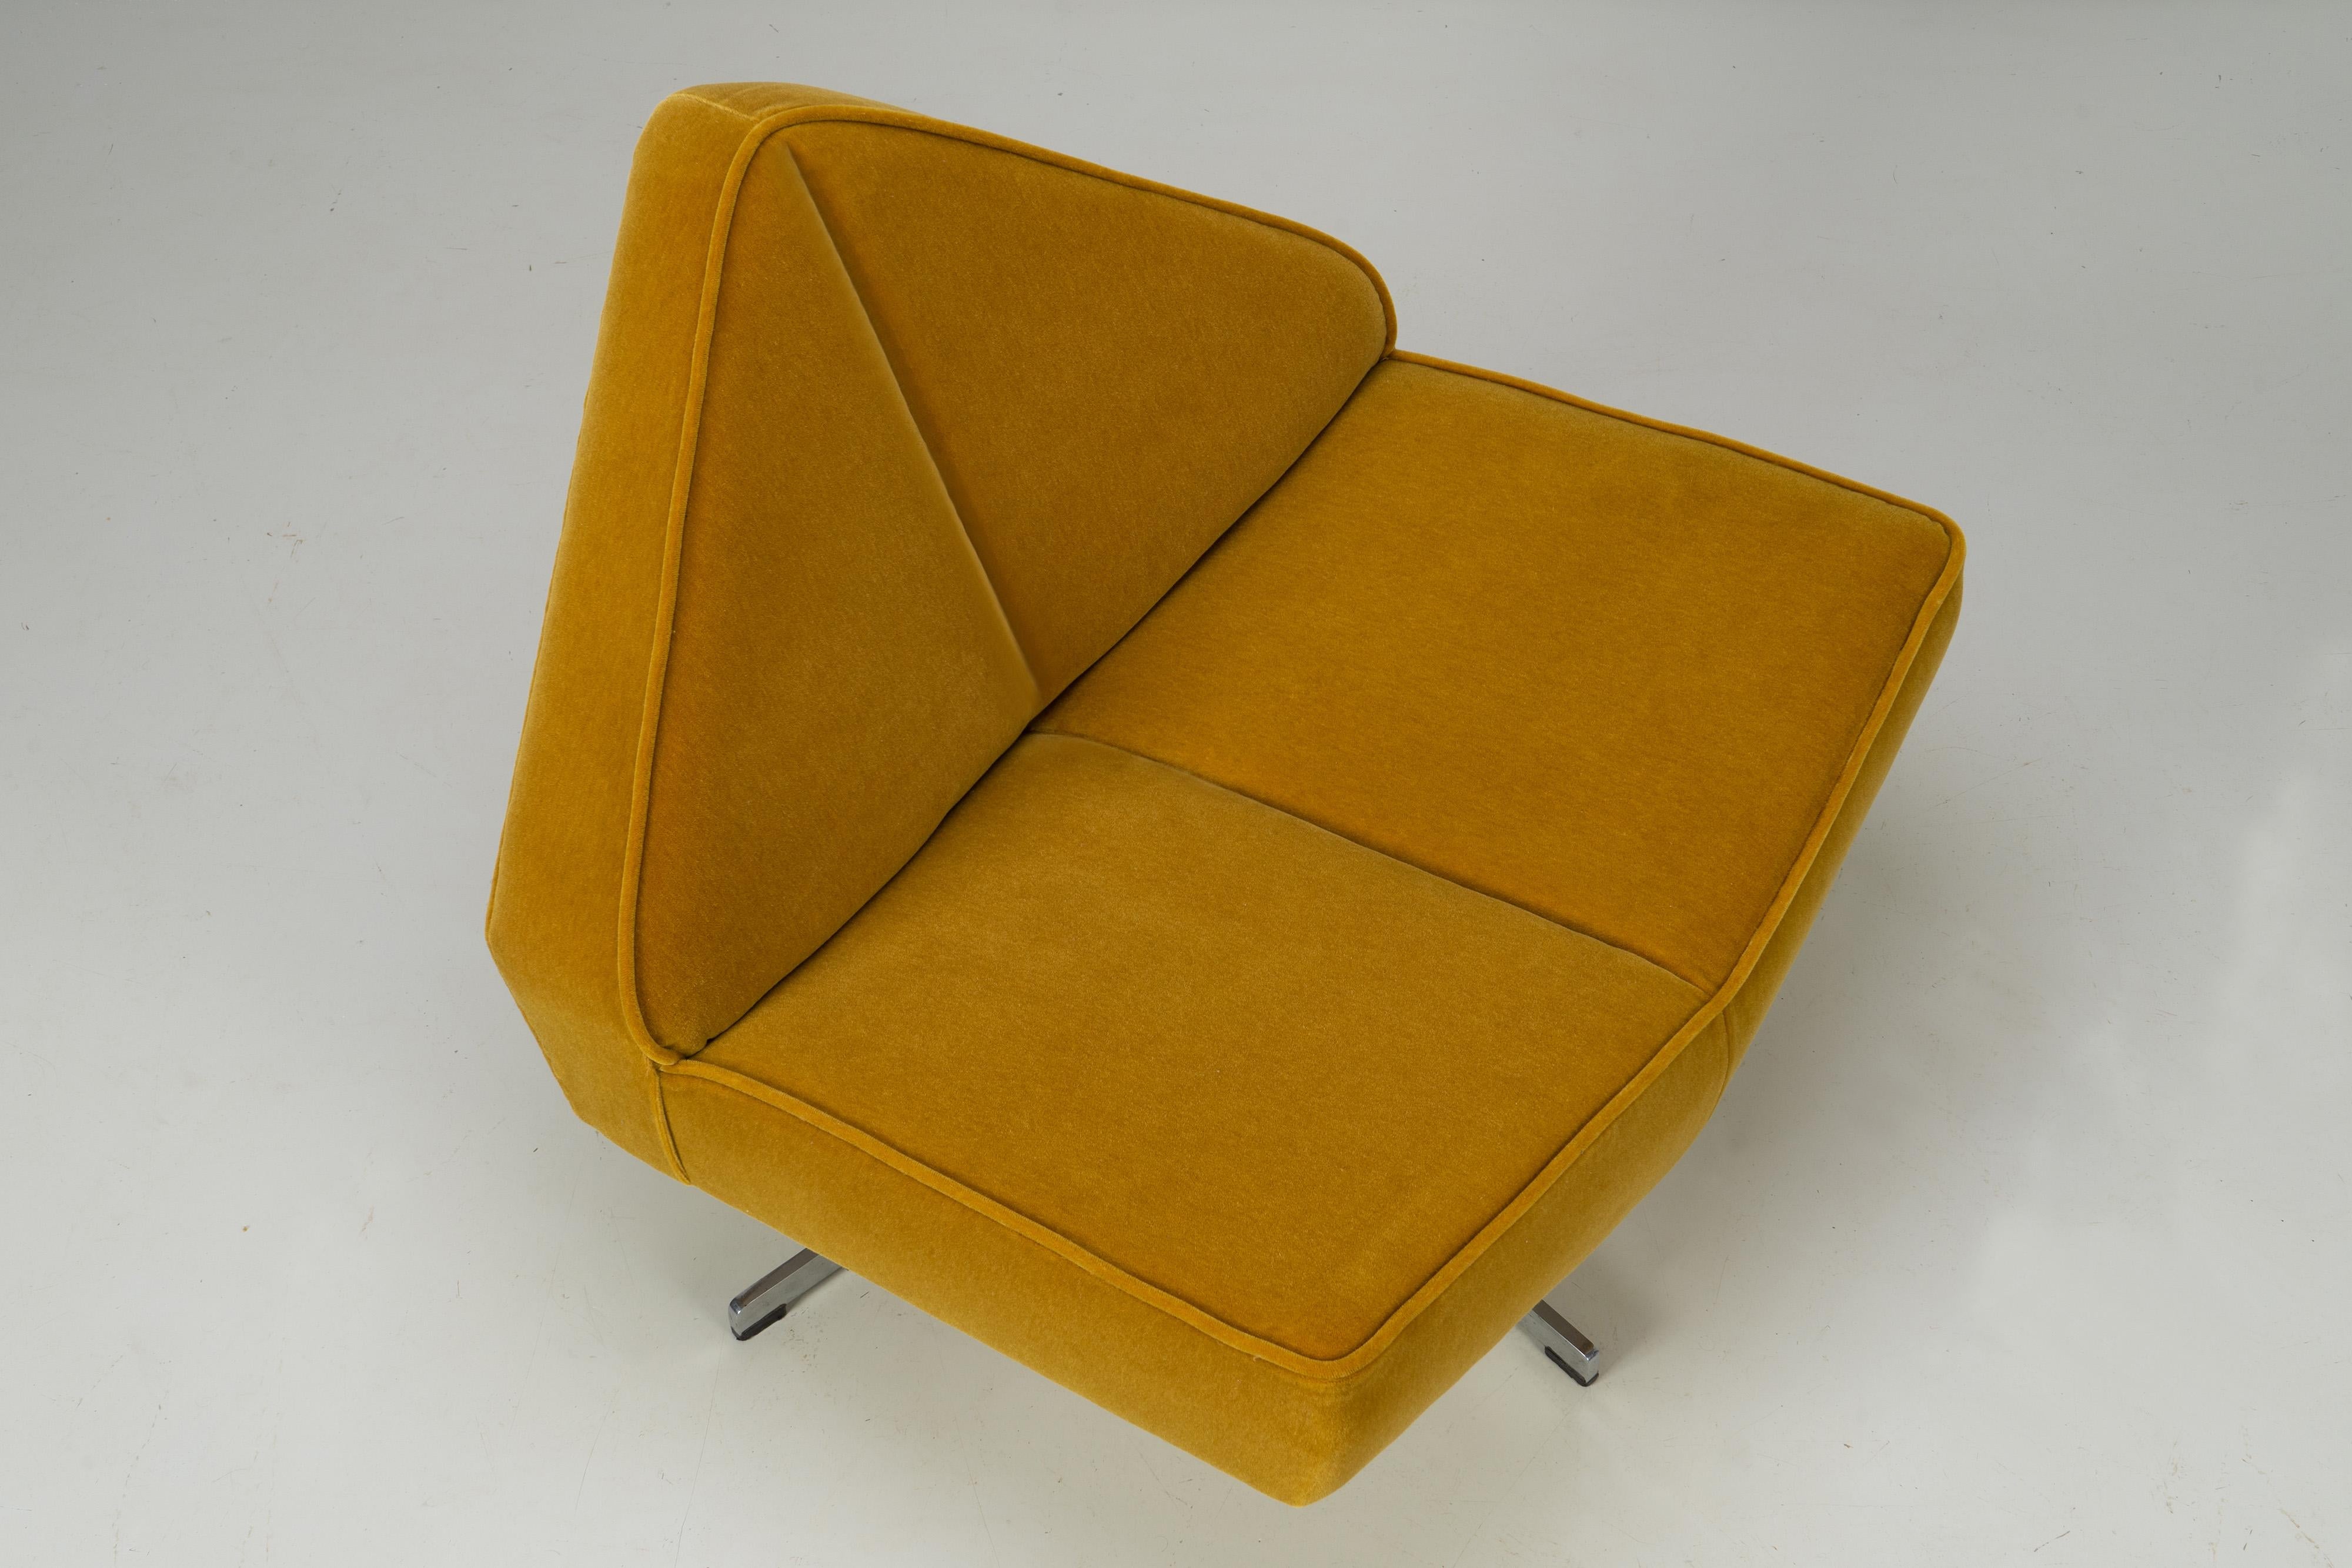 Swiveling Mid-Century Lounge Chairs 